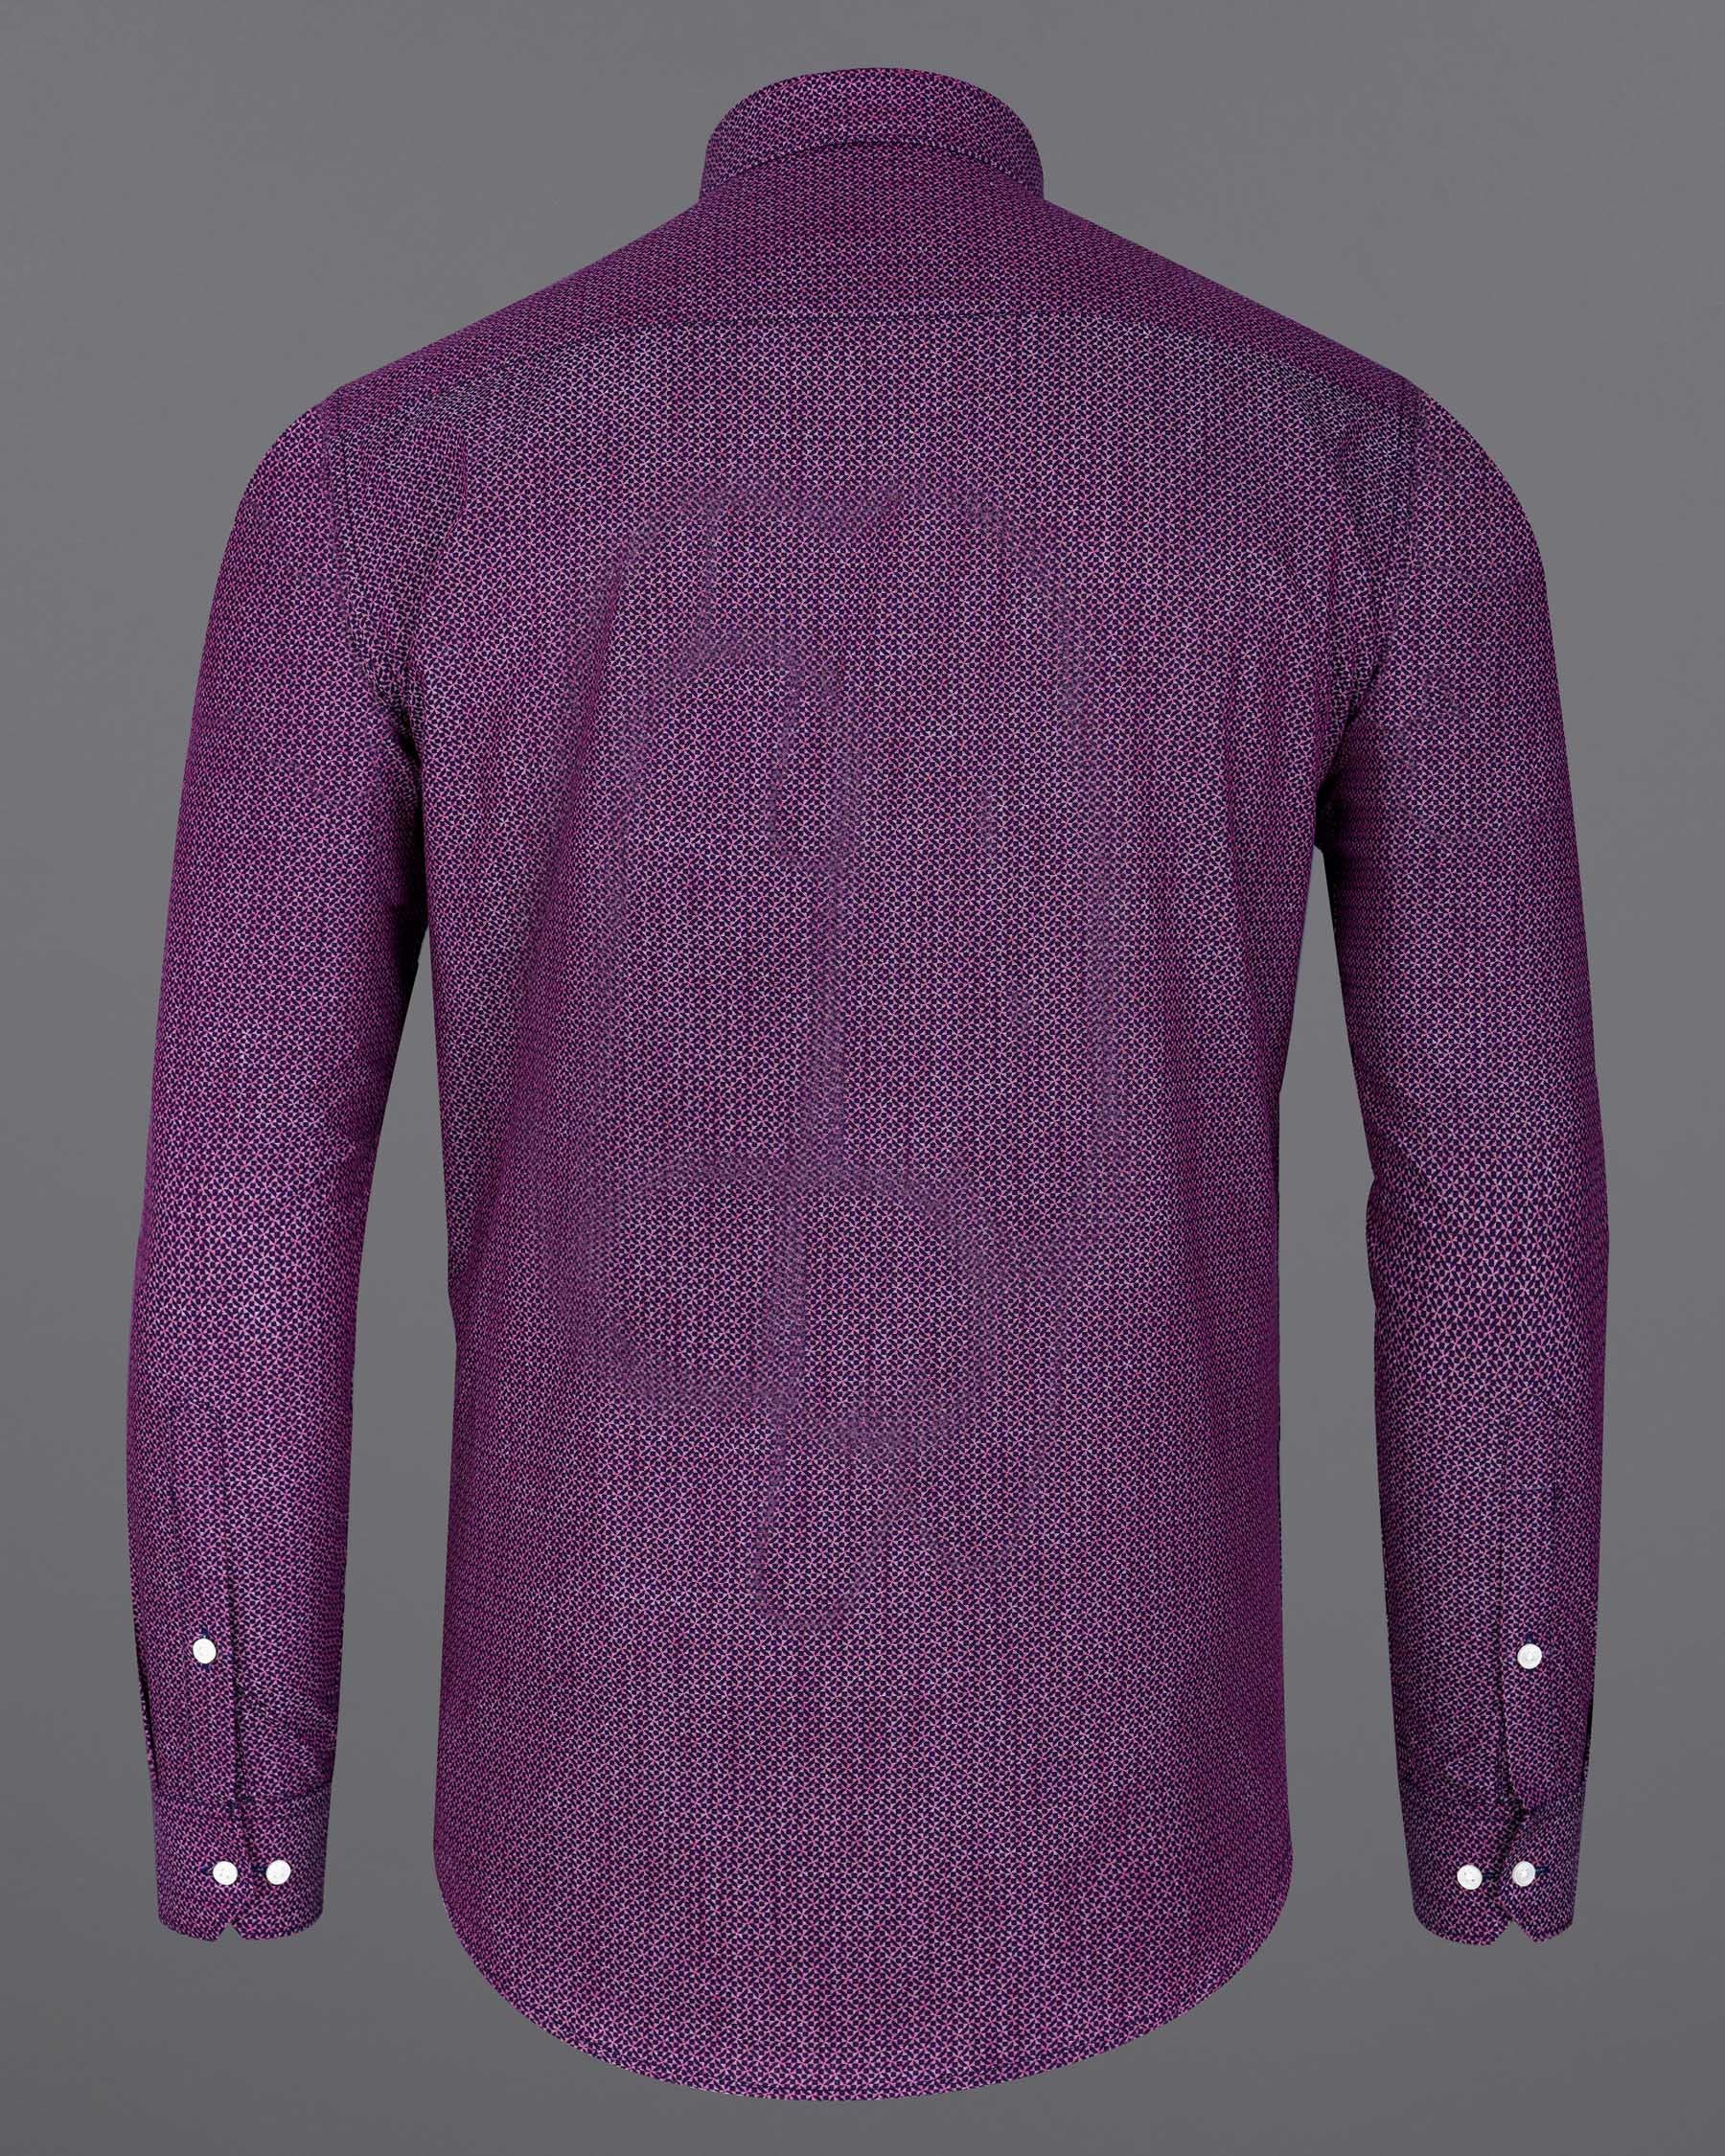 Antique Fuchsia Violet and Cinder Black Chambray Textured Premium Cotton Shirt 7928-BD-38, 7928-BD-H-38, 7928-BD-39, 7928-BD-H-39, 7928-BD-40, 7928-BD-H-40, 7928-BD-42, 7928-BD-H-42, 7928-BD-44, 7928-BD-H-44, 7928-BD-46, 7928-BD-H-46, 7928-BD-48, 7928-BD-H-48, 7928-BD-50, 7928-BD-H-50, 7928-BD-52, 7928-BD-H-52